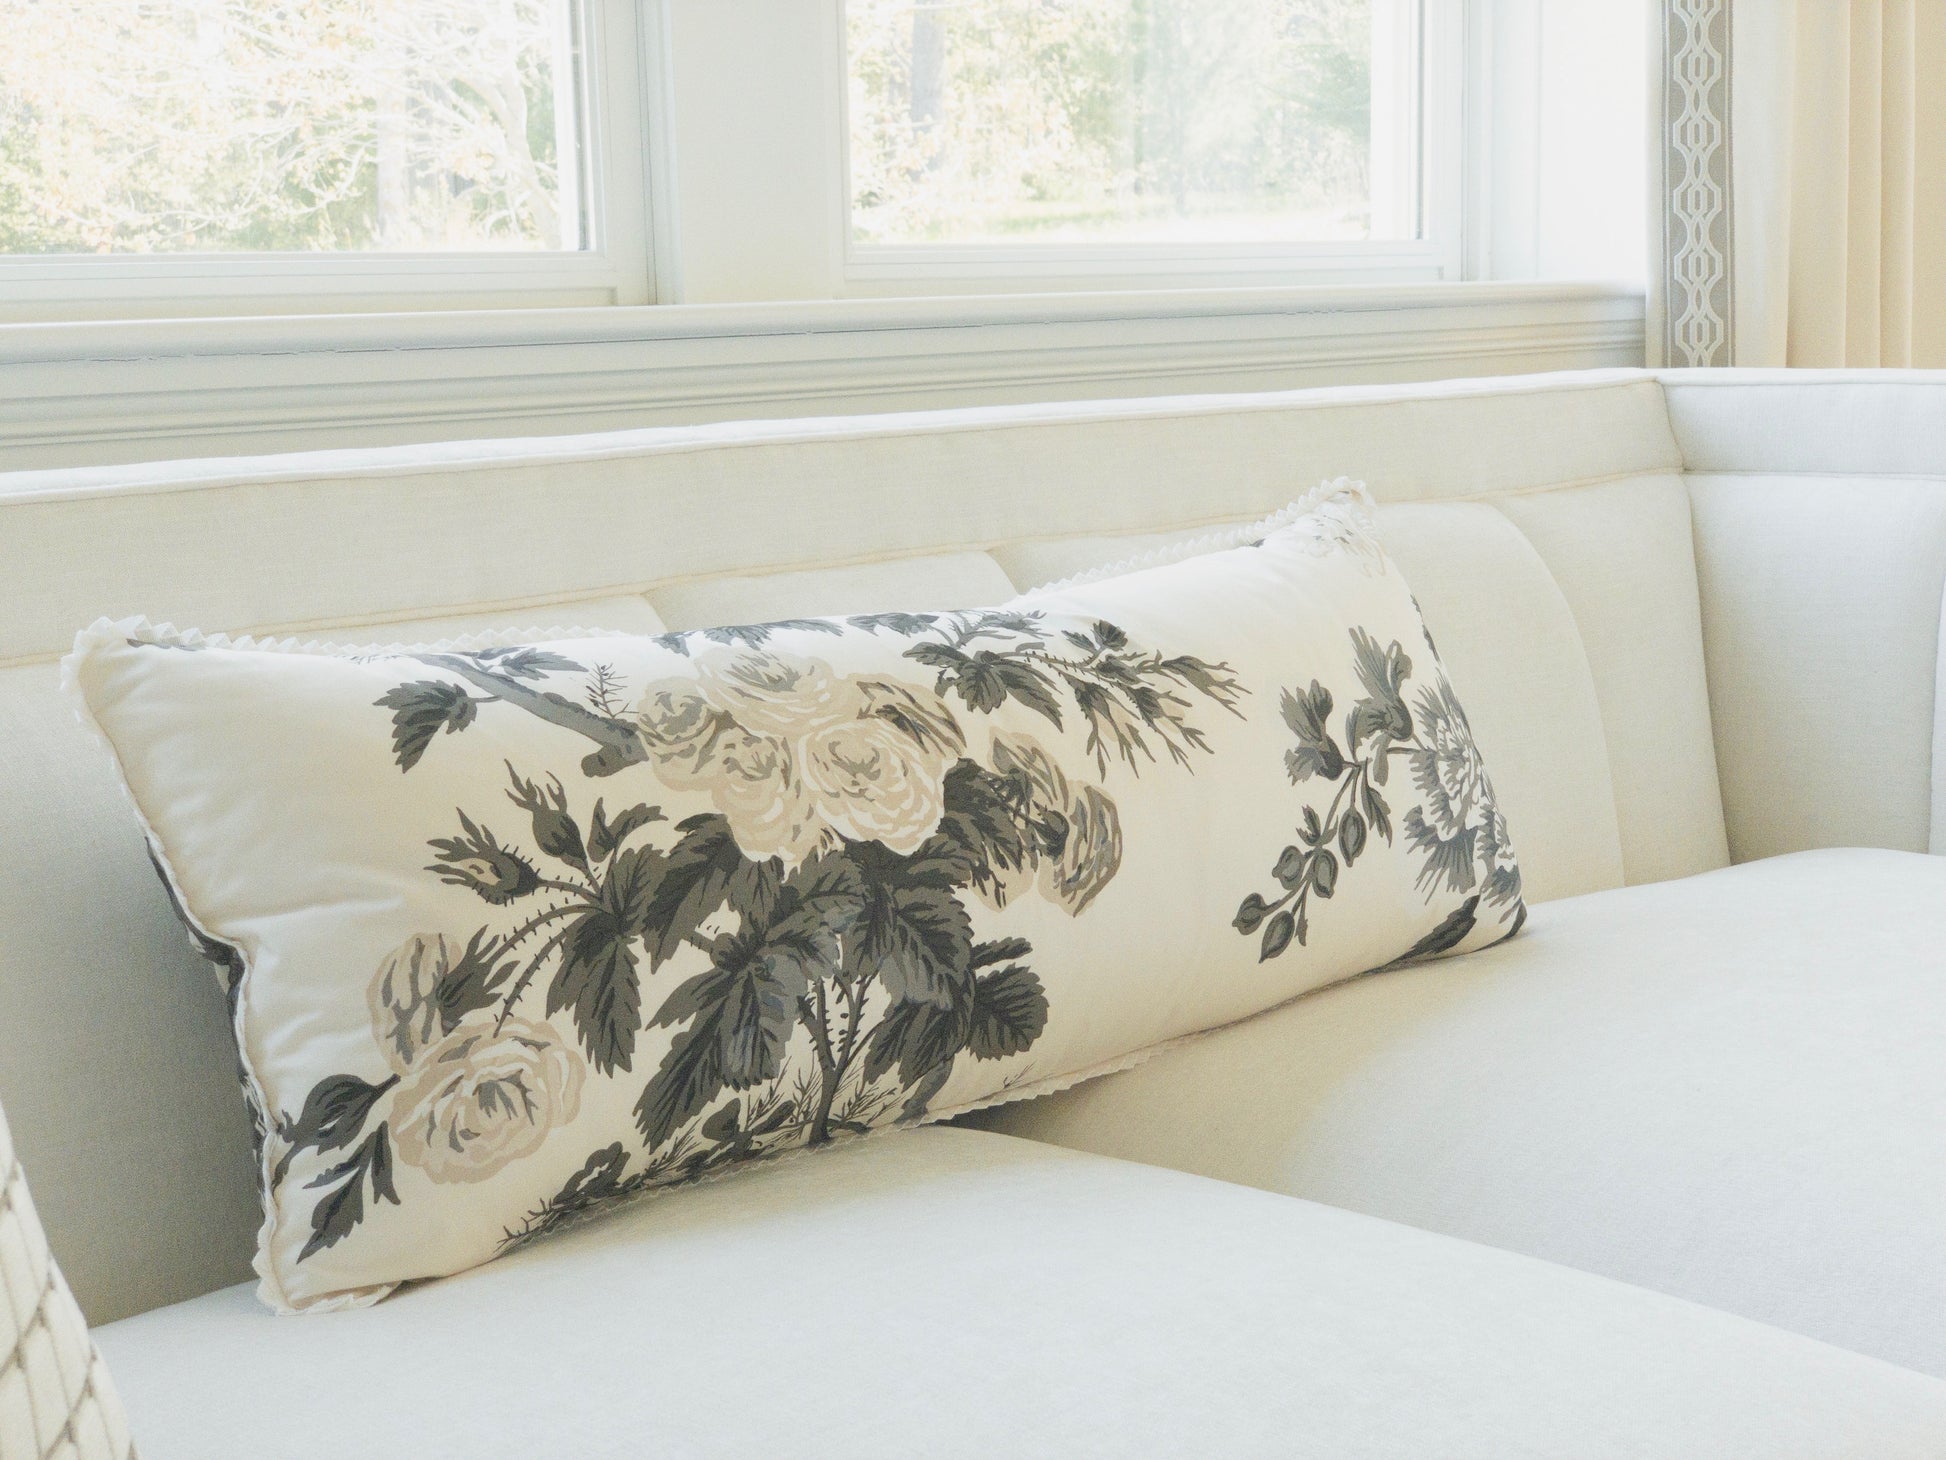 Long lumbar designer custom made floral pillow cover with white trim